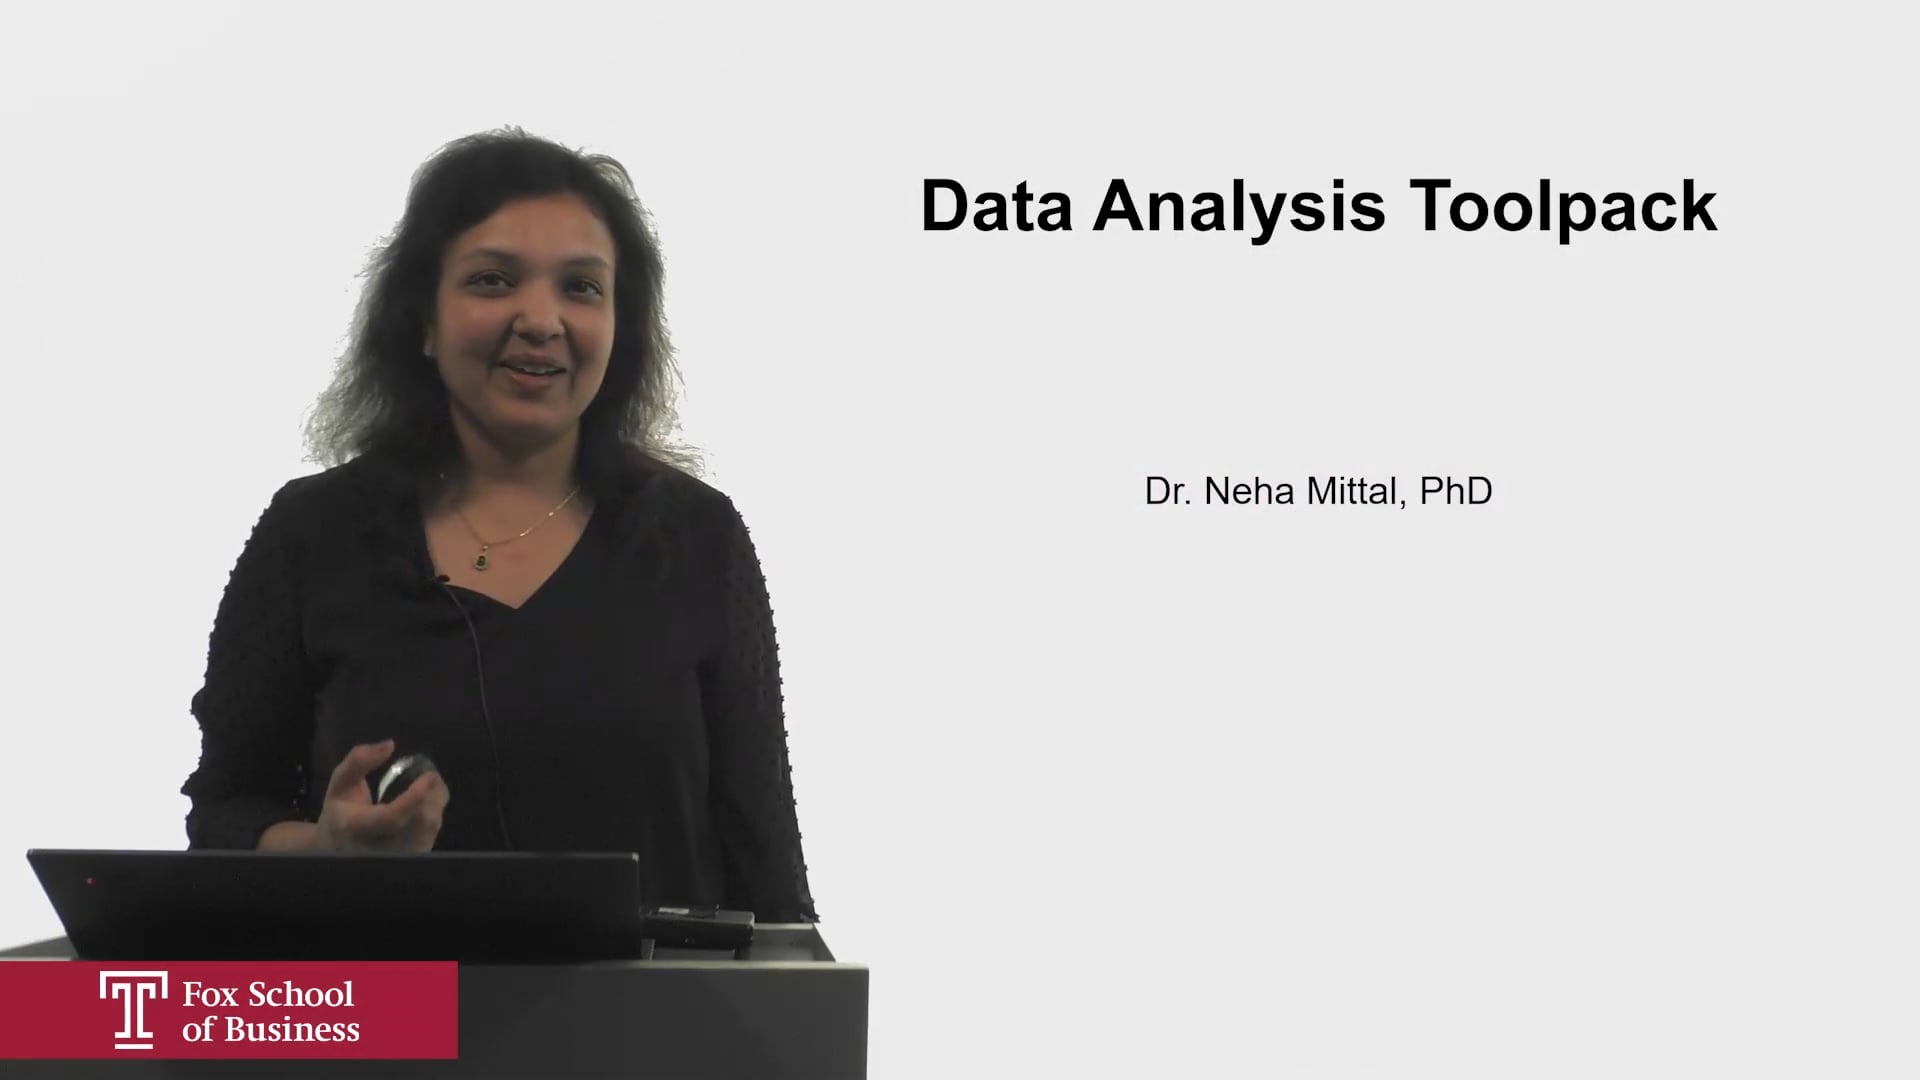 Data Analysis Toolpack